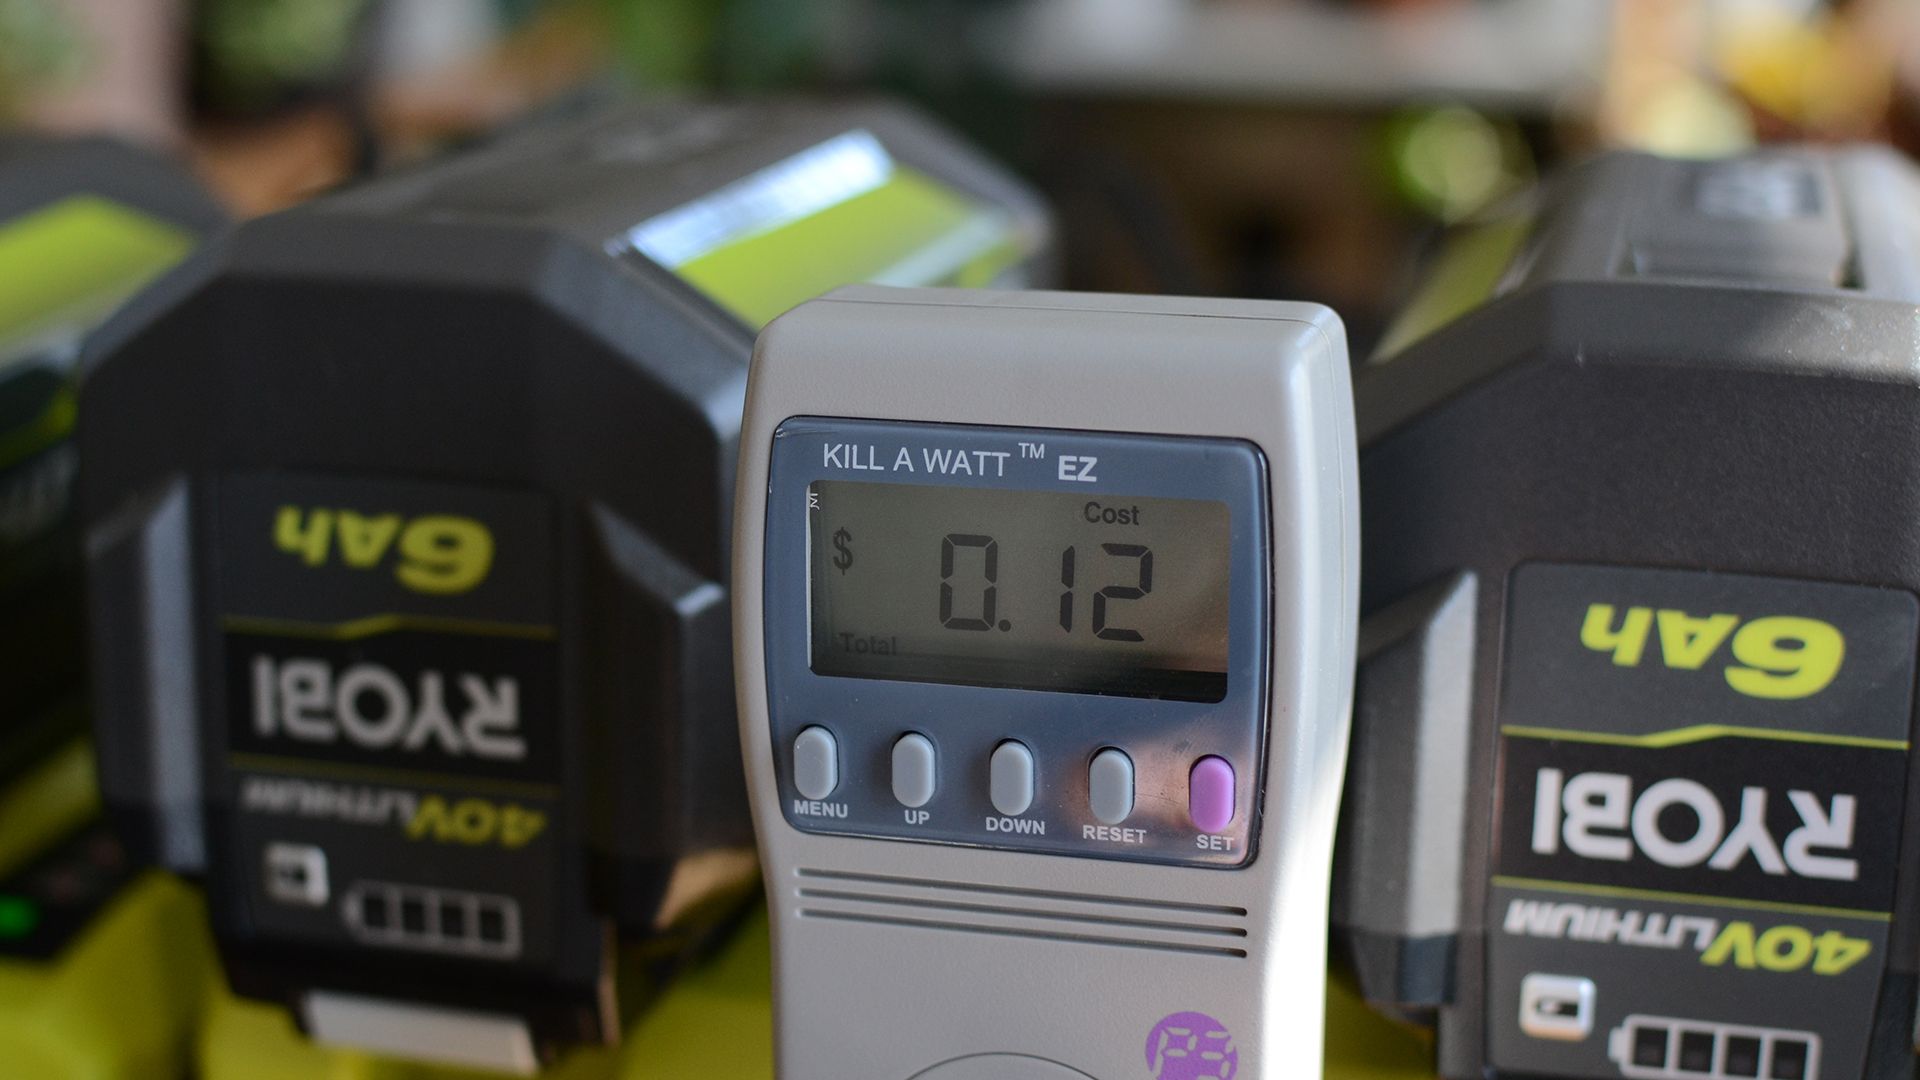 A closeup view of a Kill A Watt meter charging some Ryobi batteries.